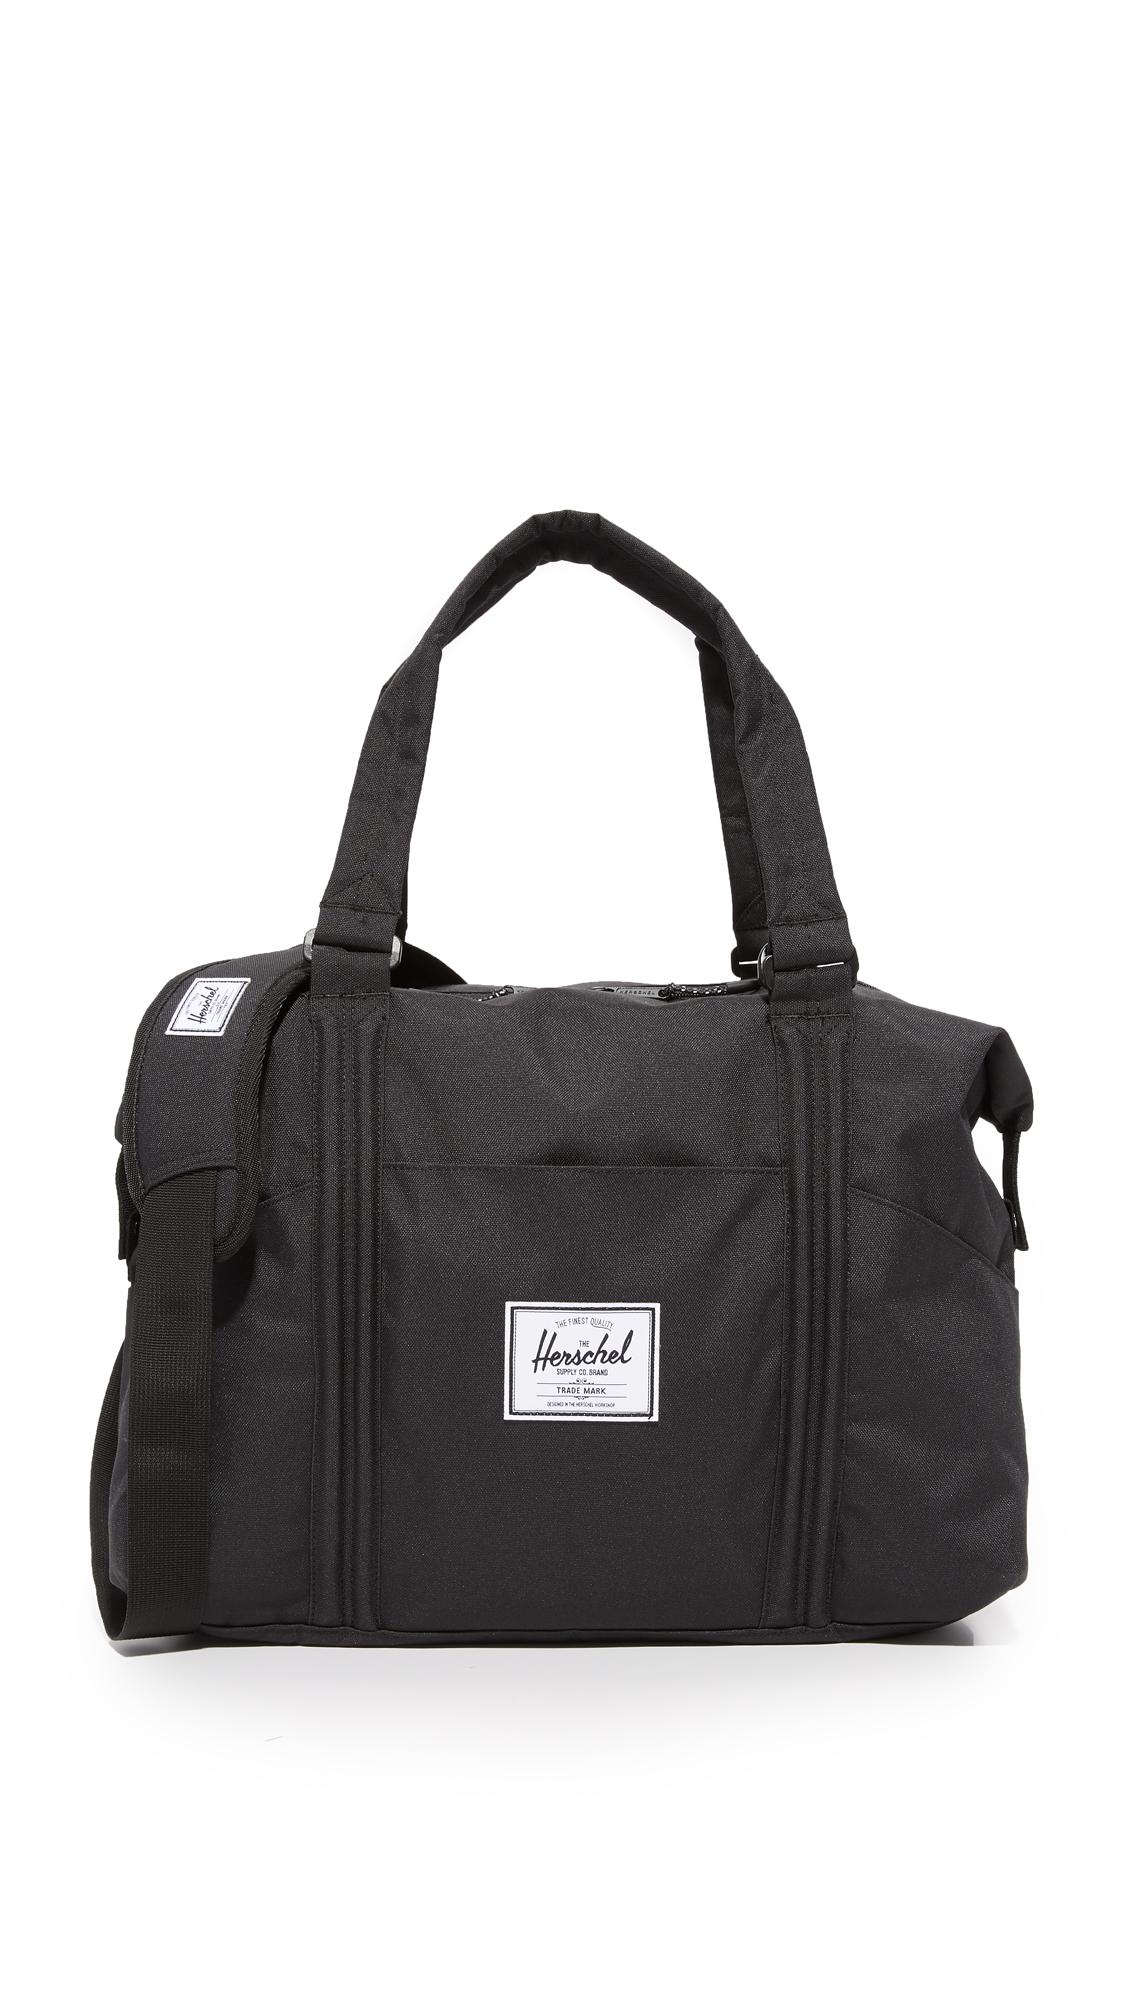 Lyst - Herschel Supply Co. Strand Sprout Diaper Bag in Black